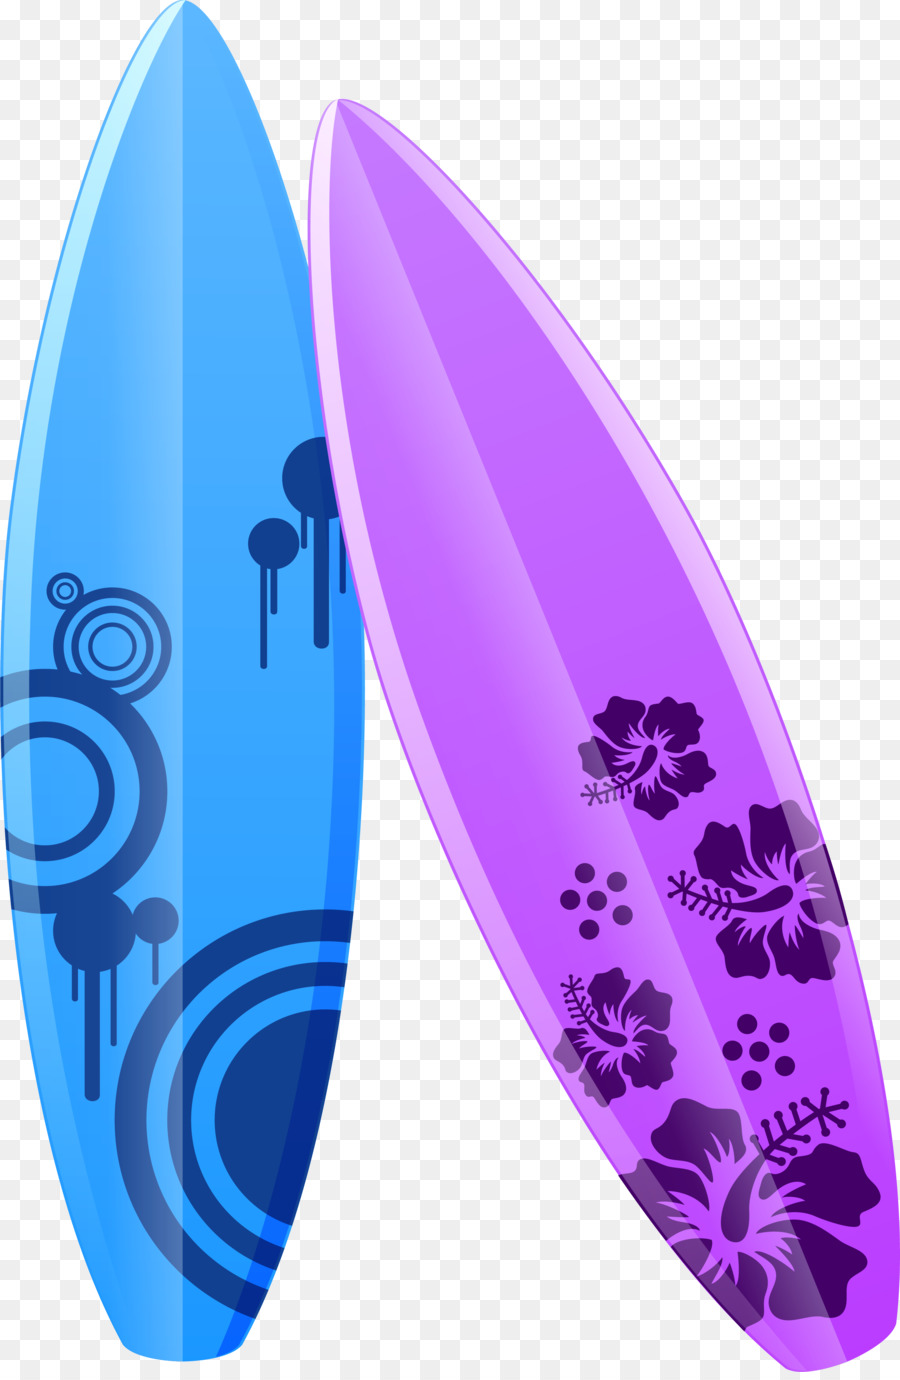 Surfboard Illustration - Purple cartoon surfboard png download - 3001*4575 - Free Transparent Surfboard png Download.